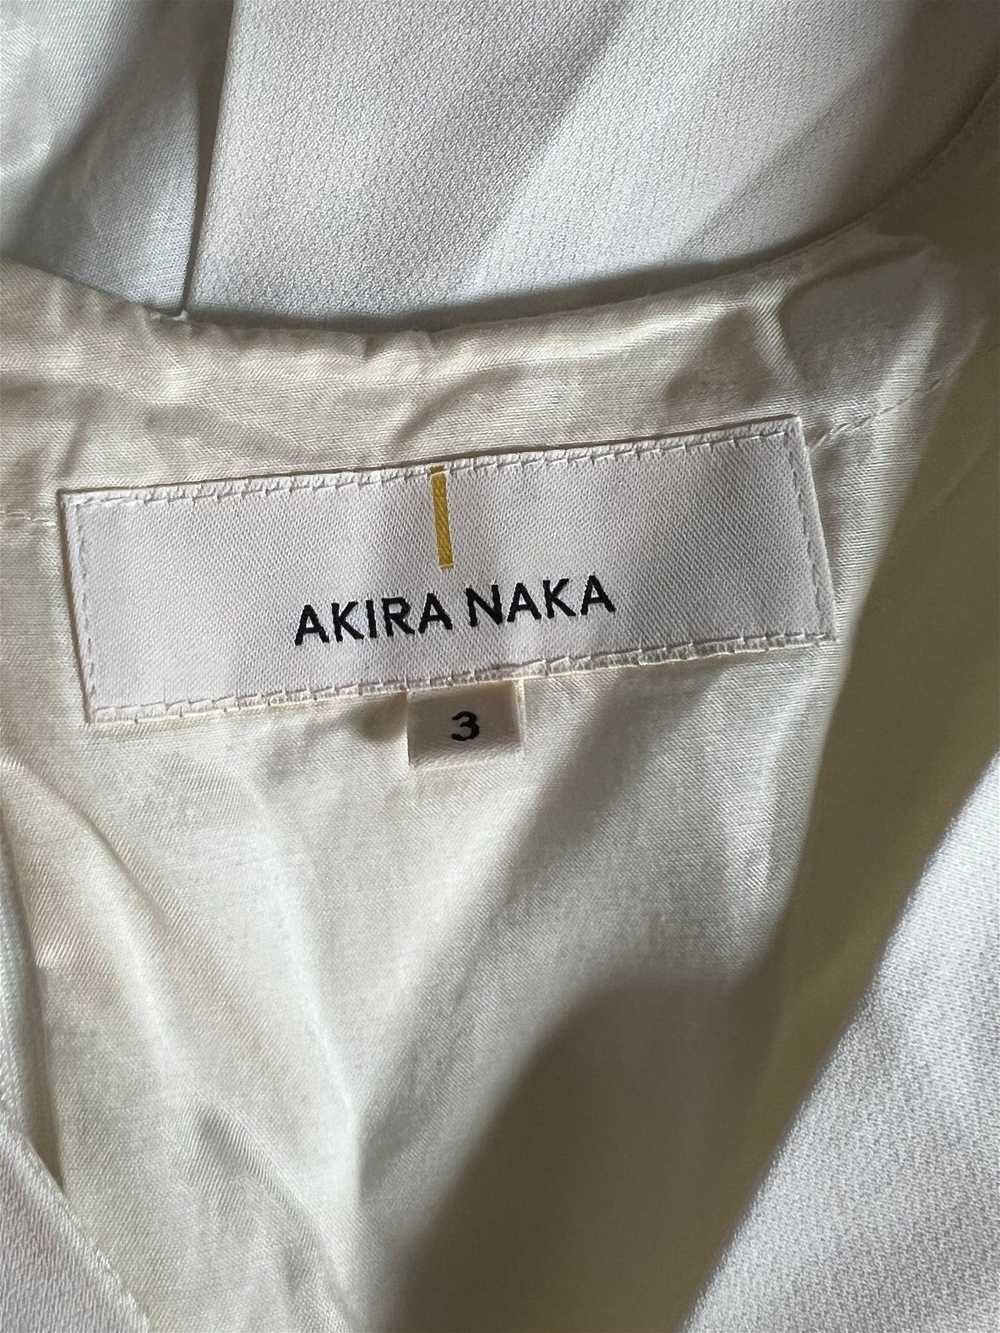 Akira Naka White Top Blouse, Size 3 - image 12